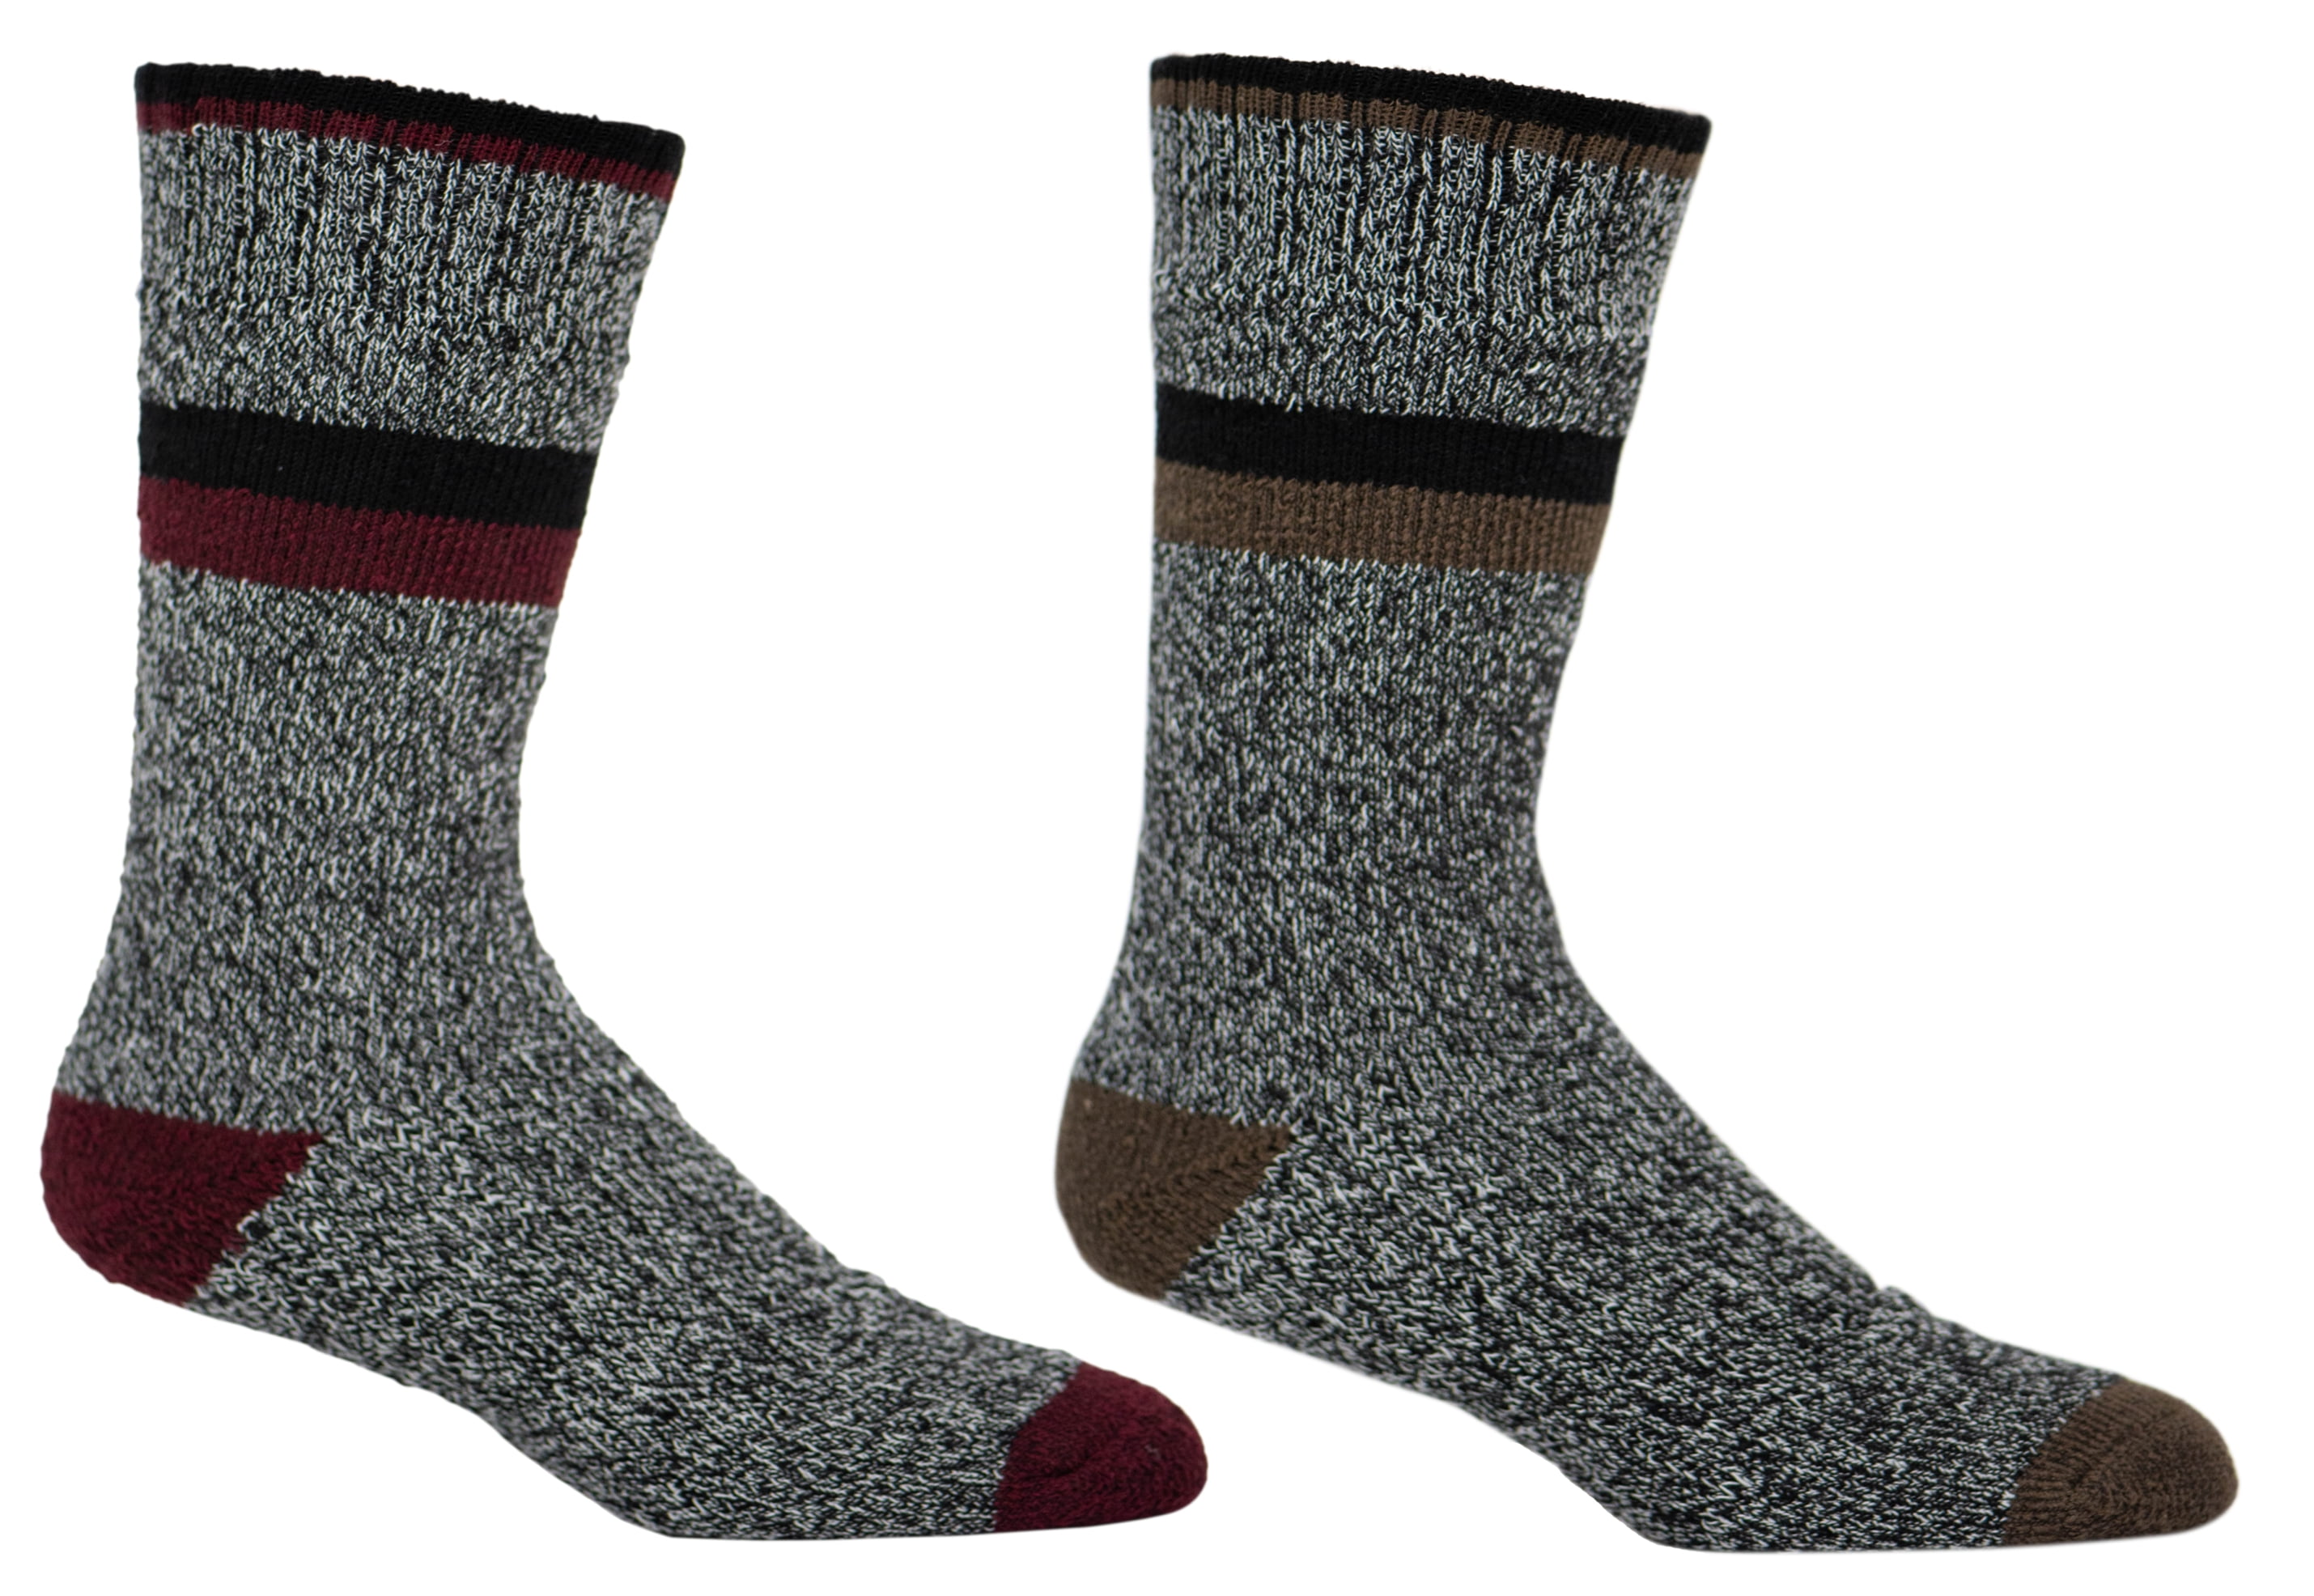 Men's Kodiak Thermal Cotton Crew Socks - 2-pack - Walmart.com